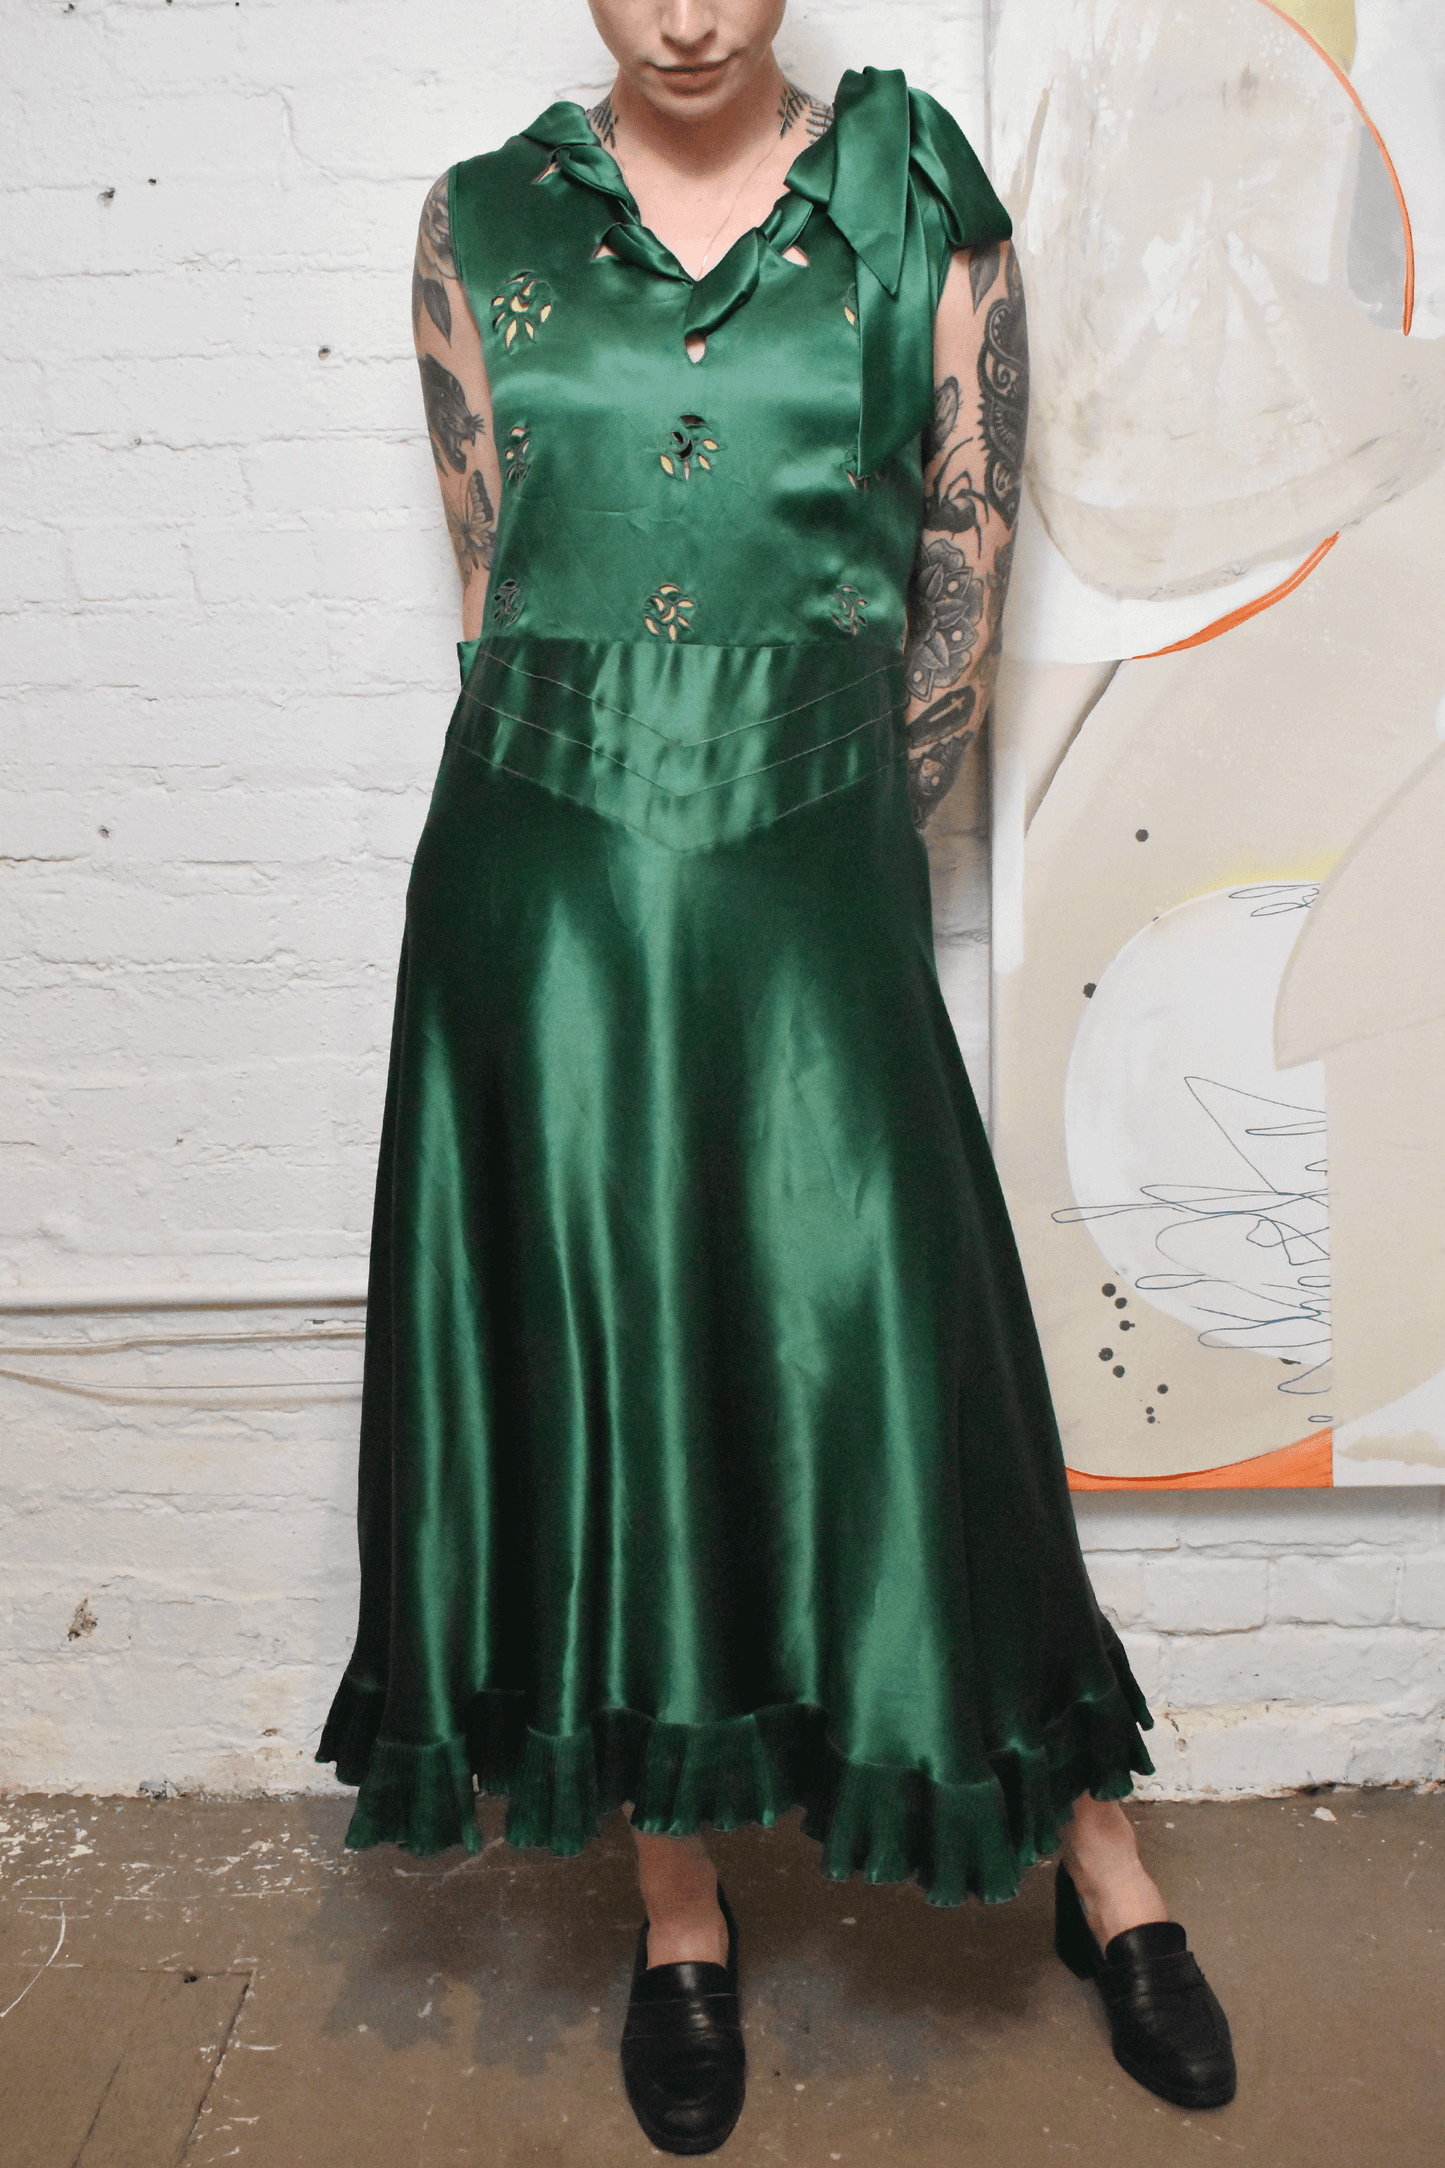 Vintage 1920s/30s Forest Green Satin Dress